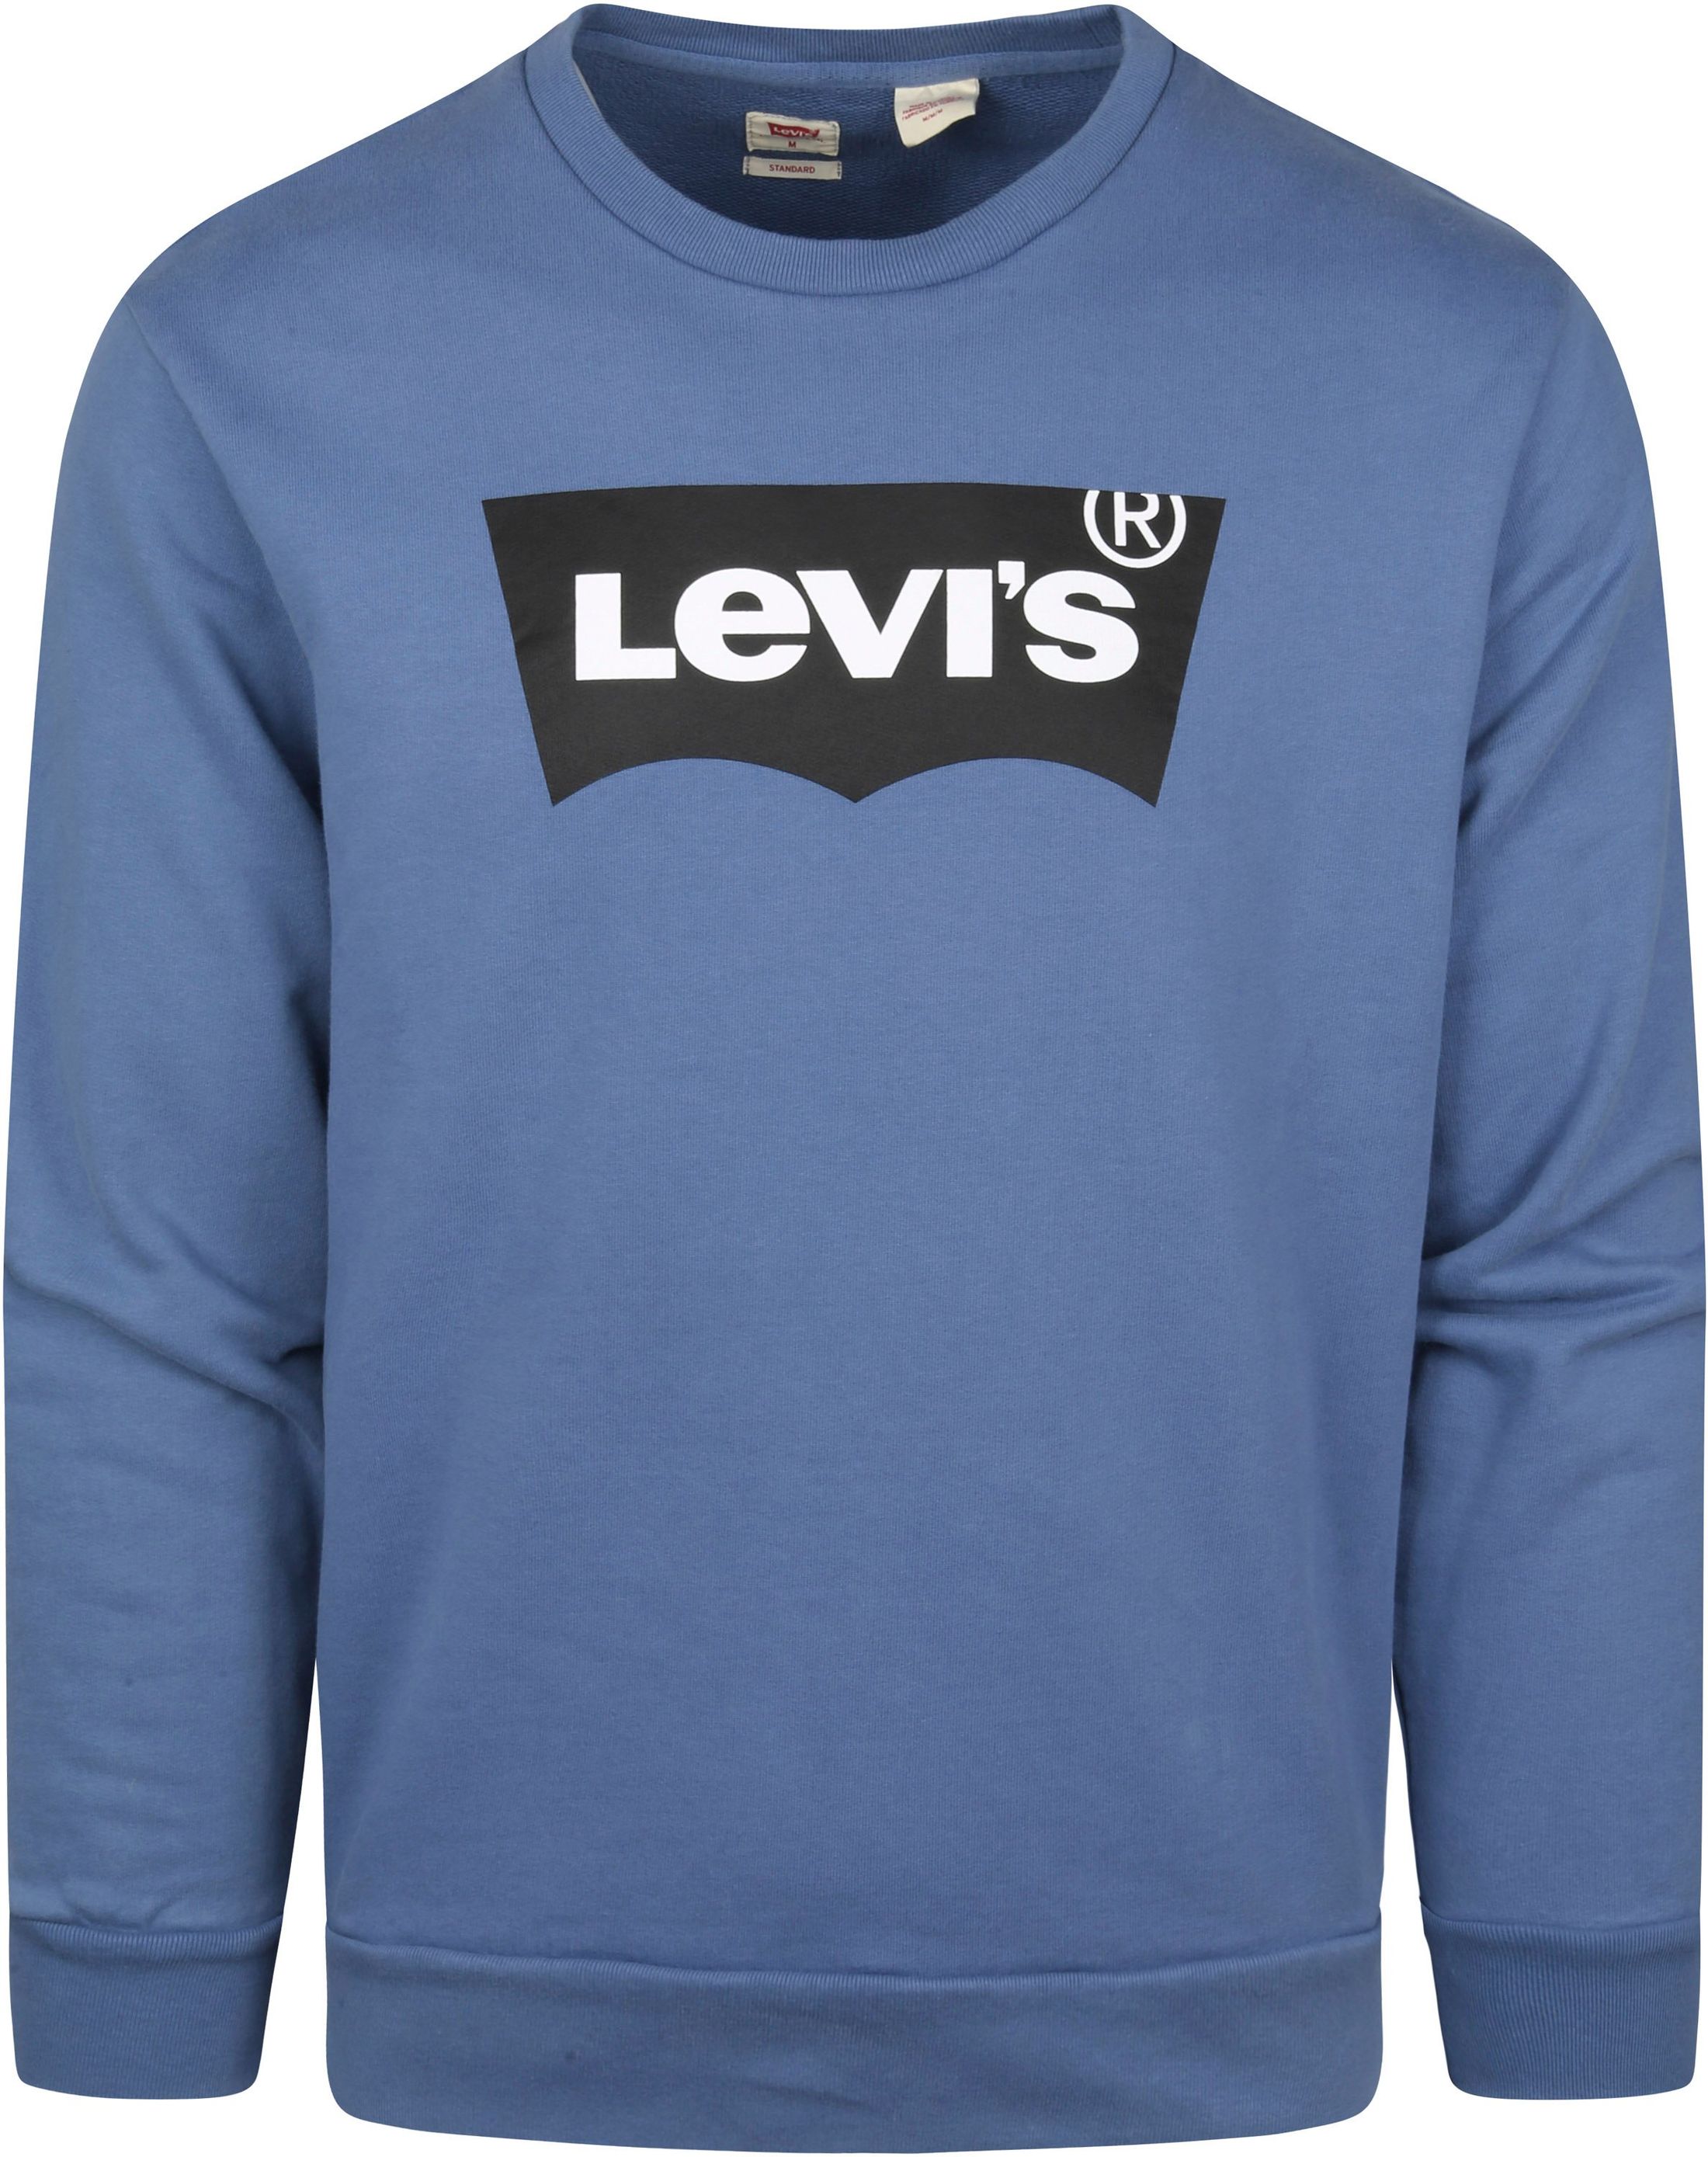 Levi's Original Graphic Sweater Blue size L